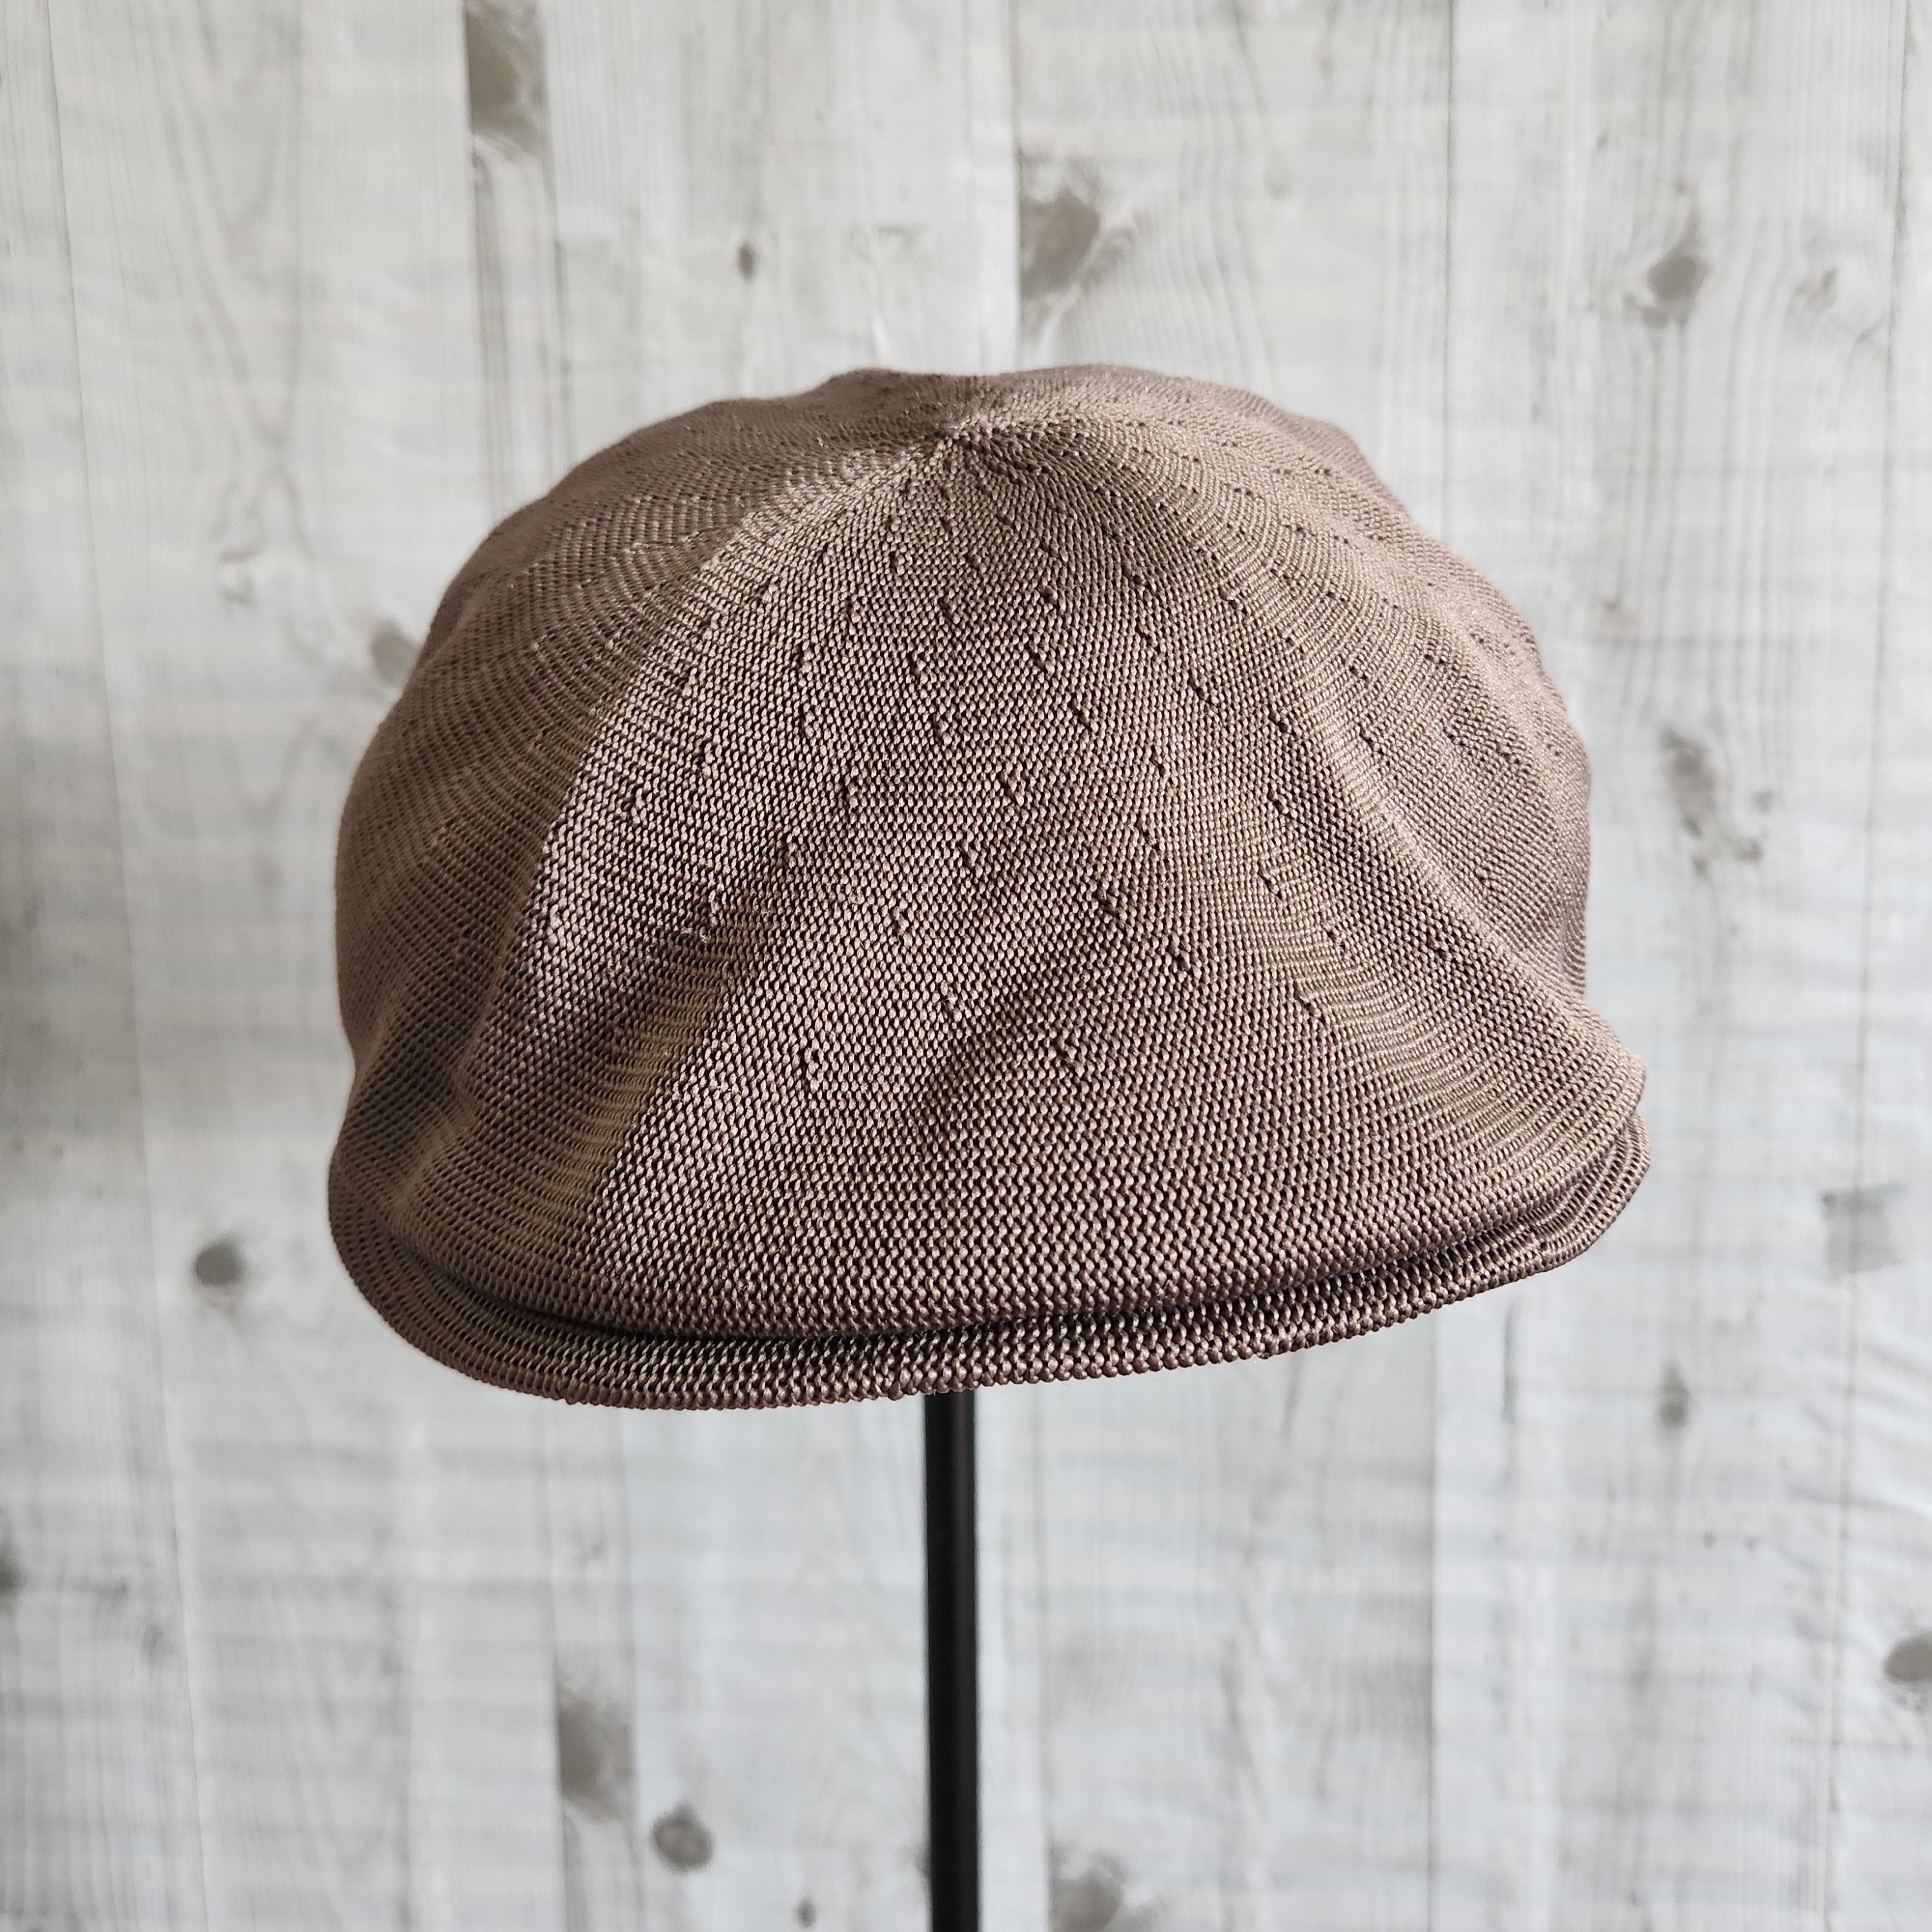 Vintage Kangol Ivy Cap / Flat Cap Size Large - 9